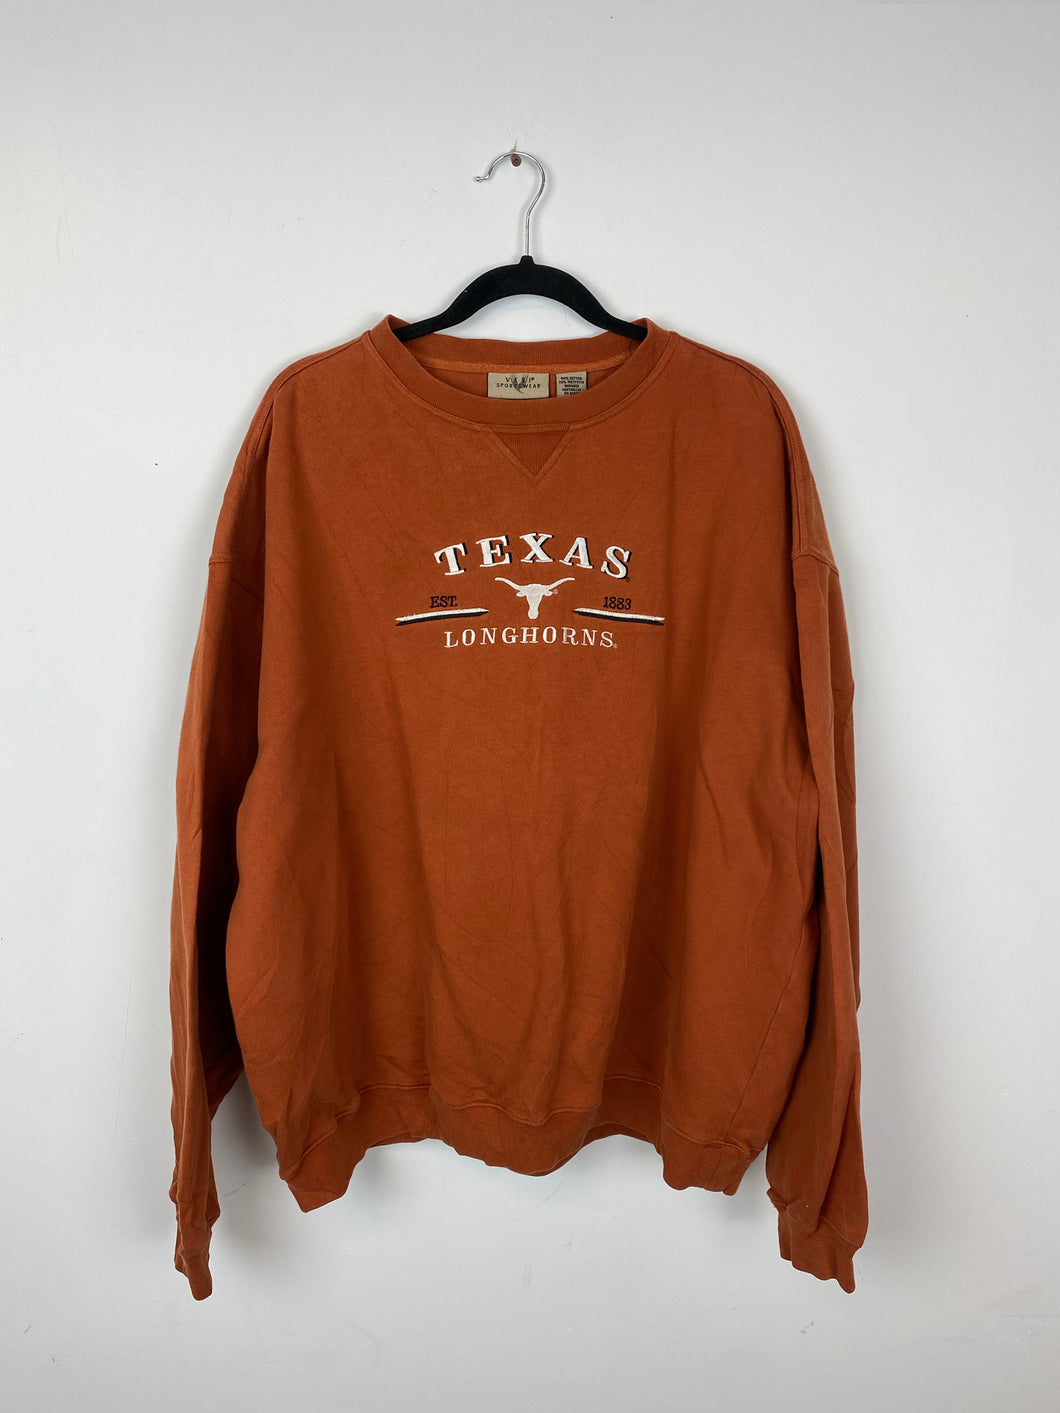 Embroidered Texas Longhorns crewneck